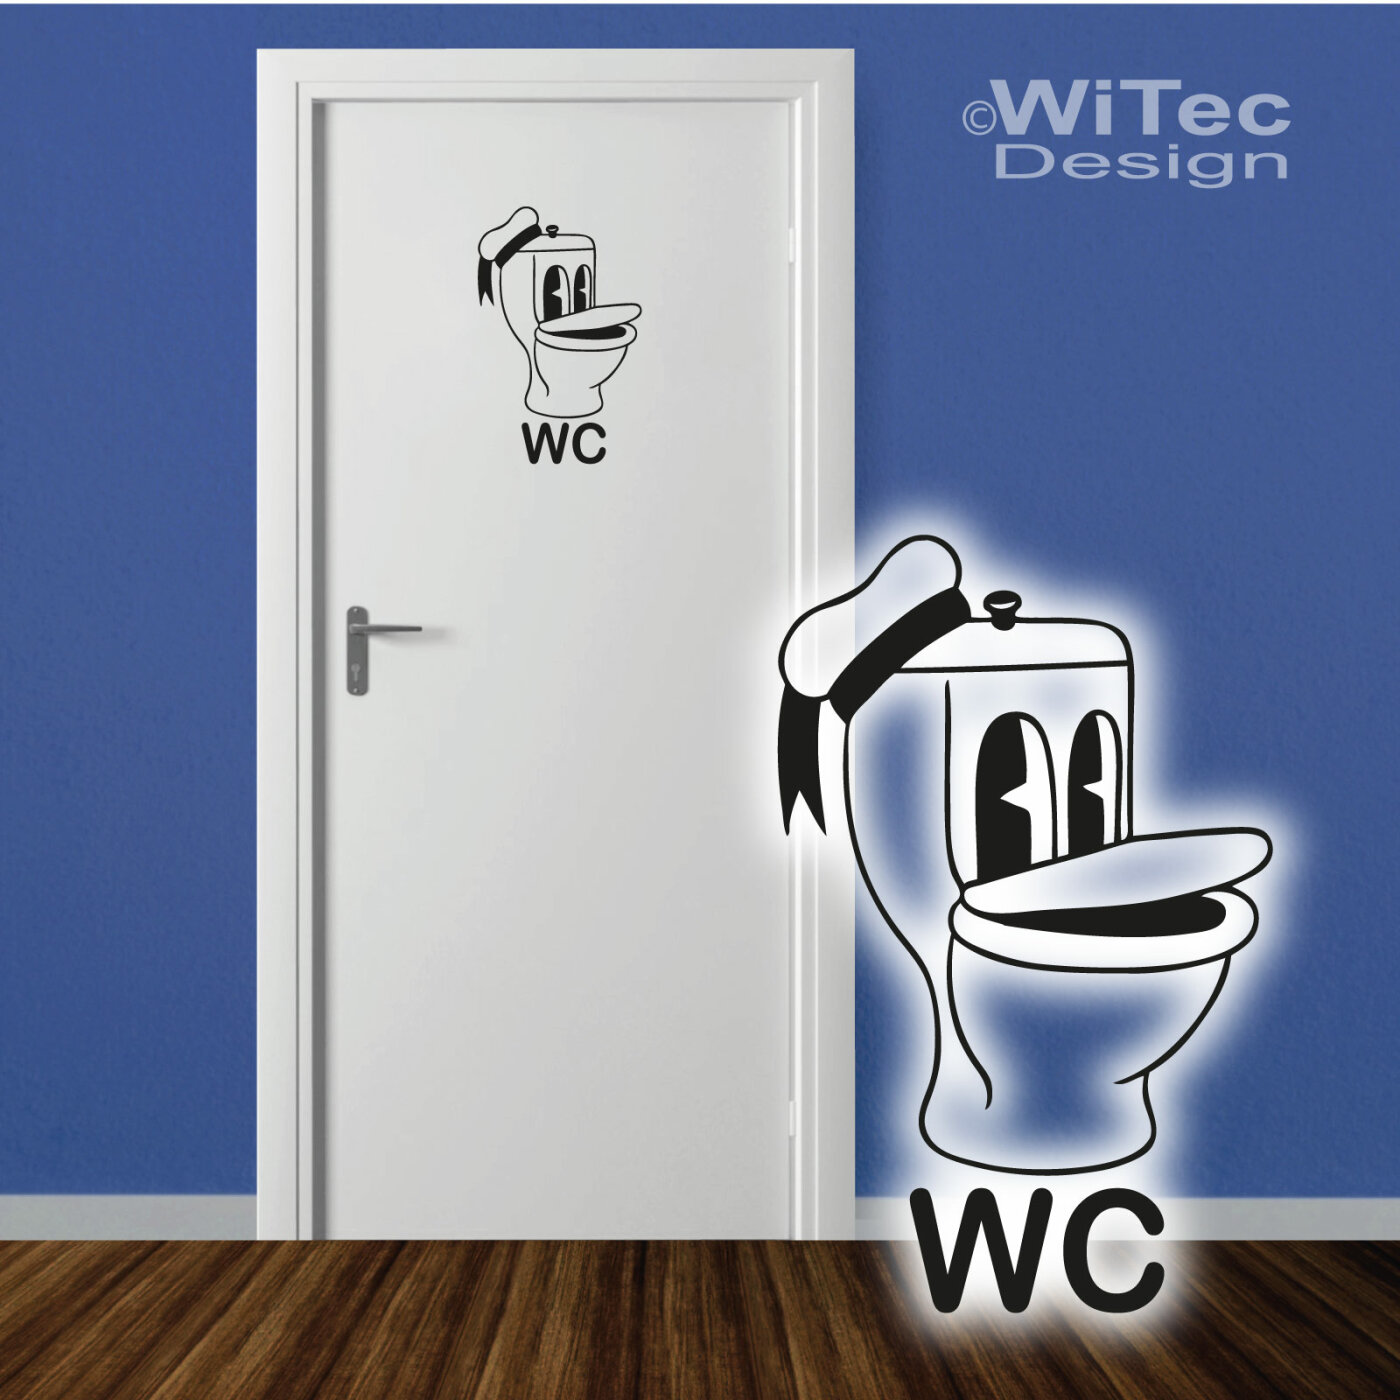 3x Wandtattoo Türaufkleber WC Toilette Badezimmer Flur Aufkleber Klo Aufkleber 